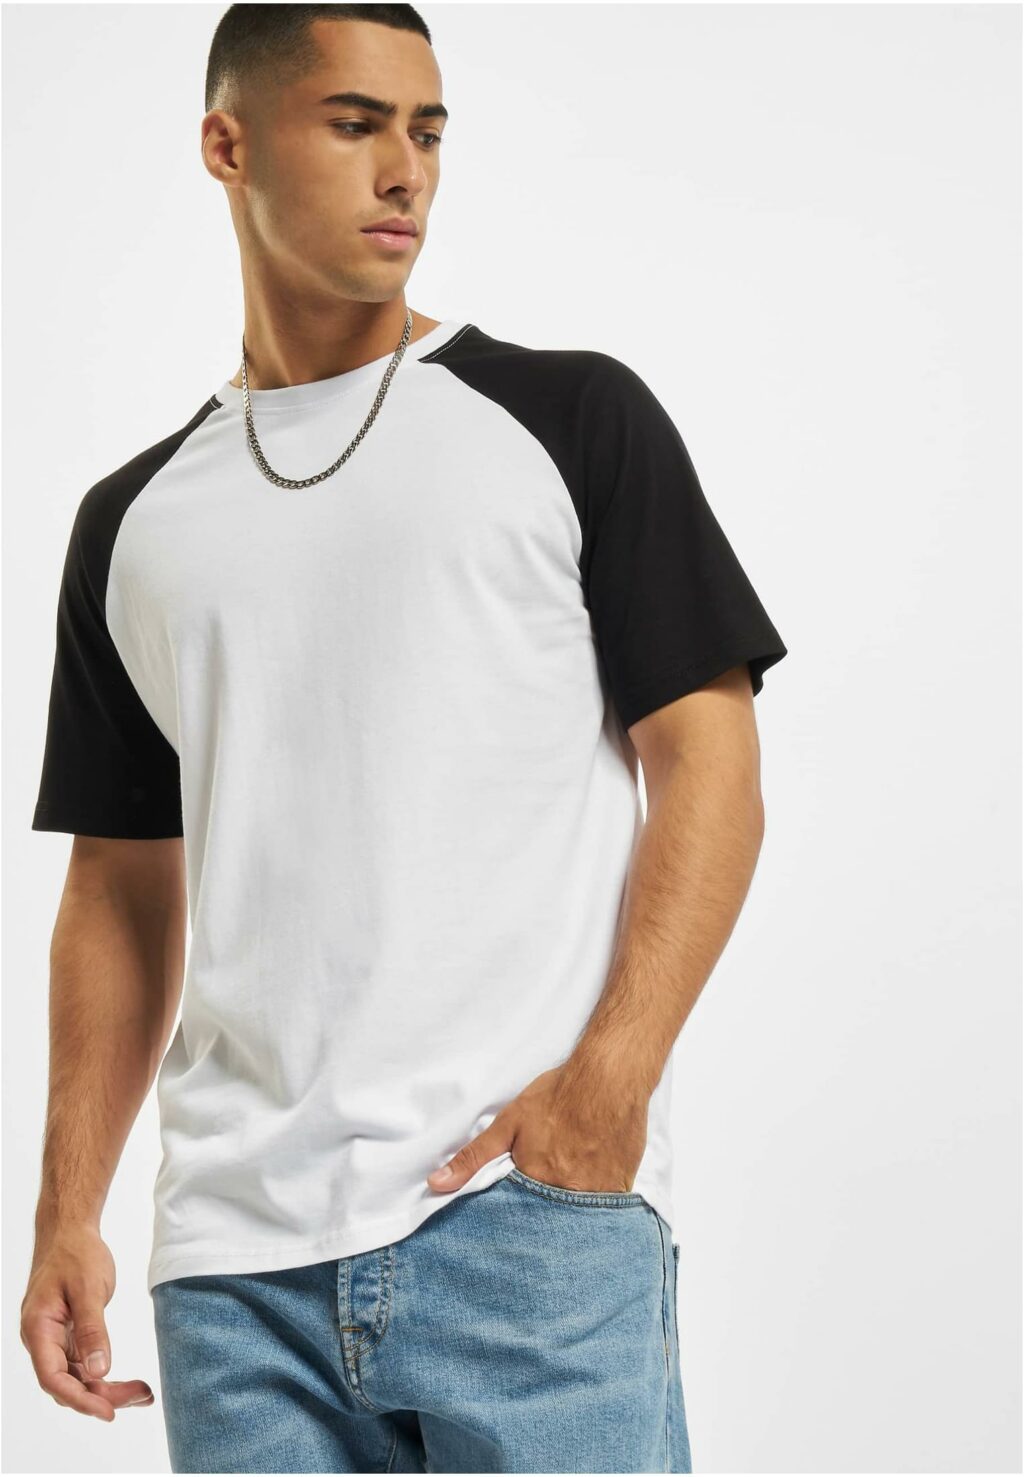 Roy T-Shirt white/black DFTS072